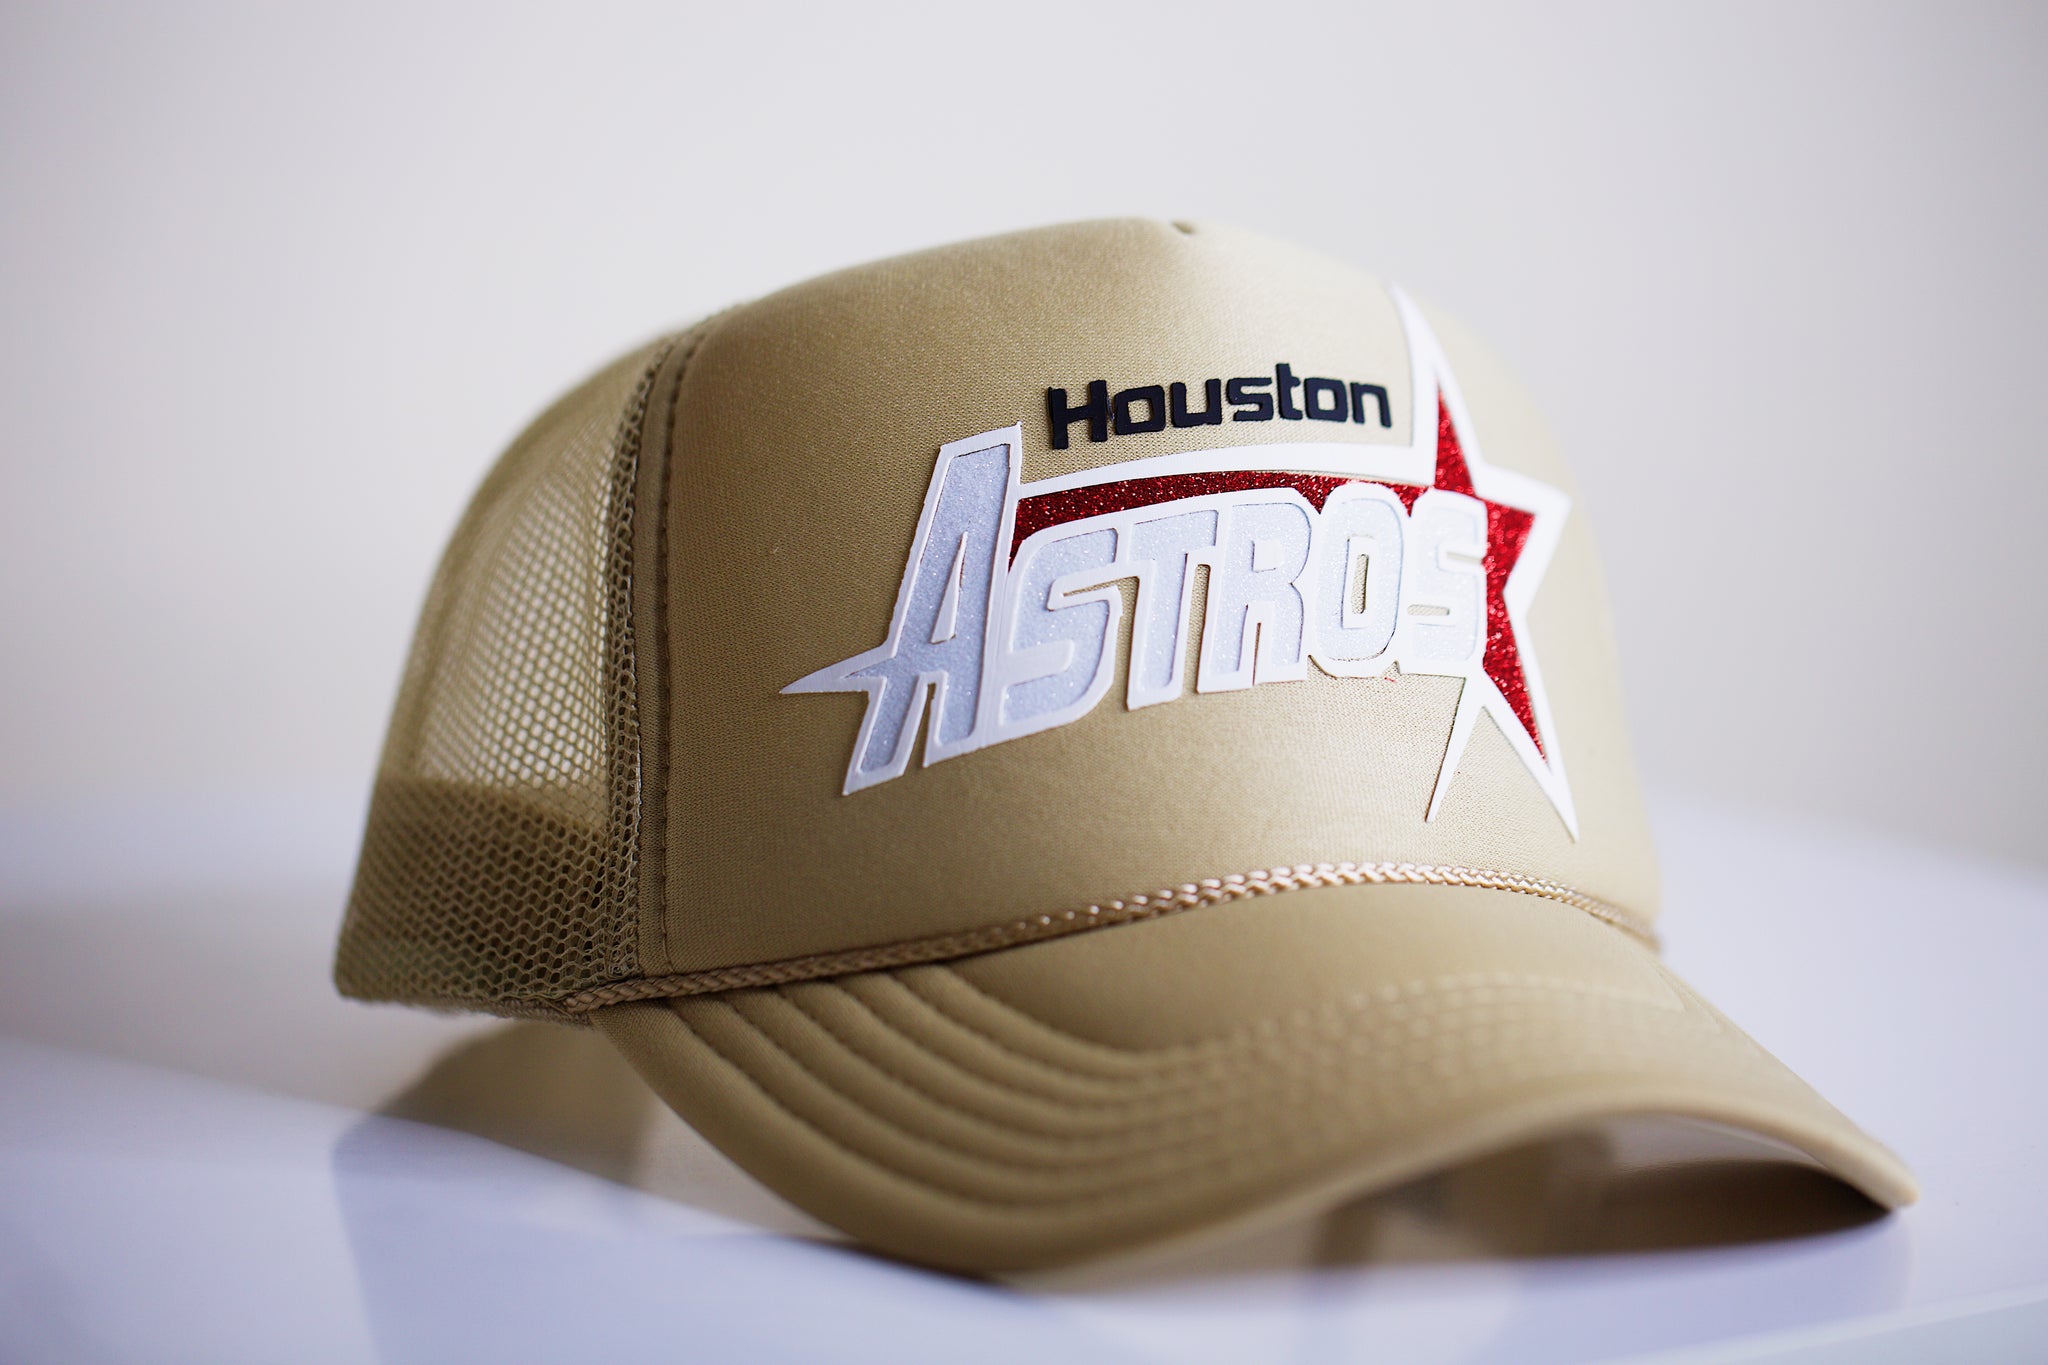 Astro -cide hat